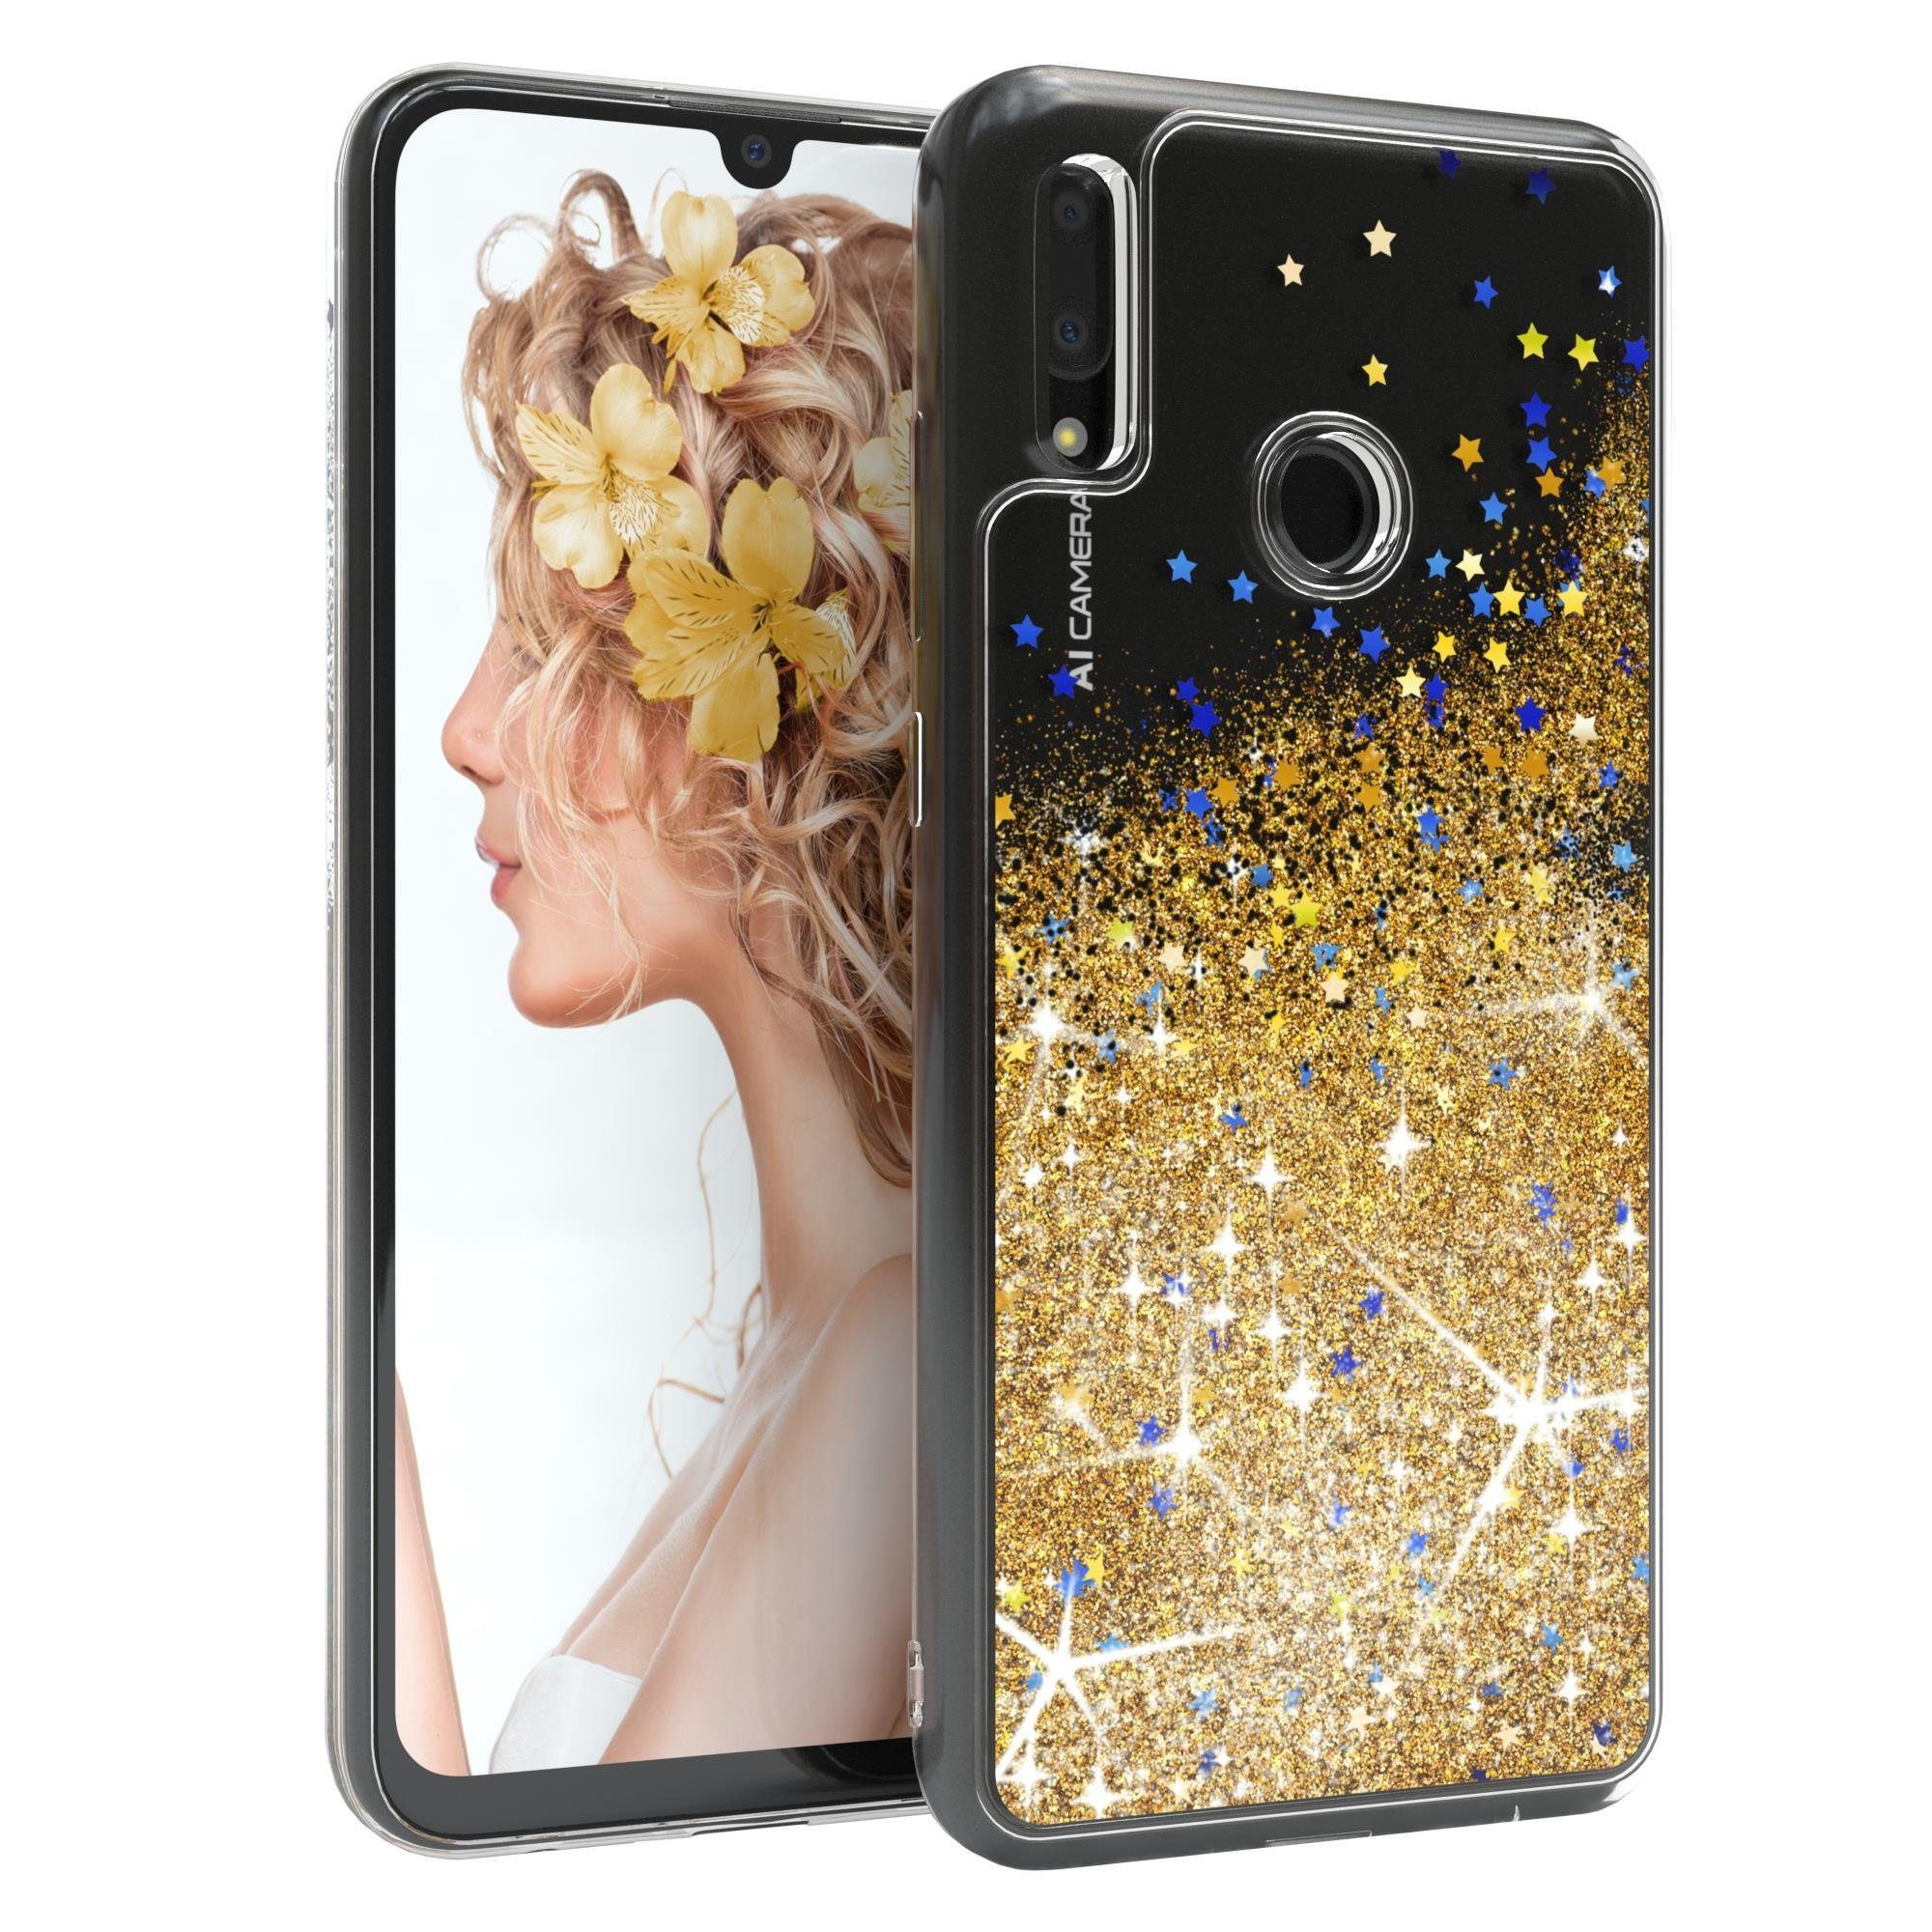 EAZY CASE Handyhülle Liquid Glittery Case für Huawei P Smart 2019 6,21 Zoll, Durchsichtig Back Case Handy Softcase Silikonhülle Glitzer Cover Gold